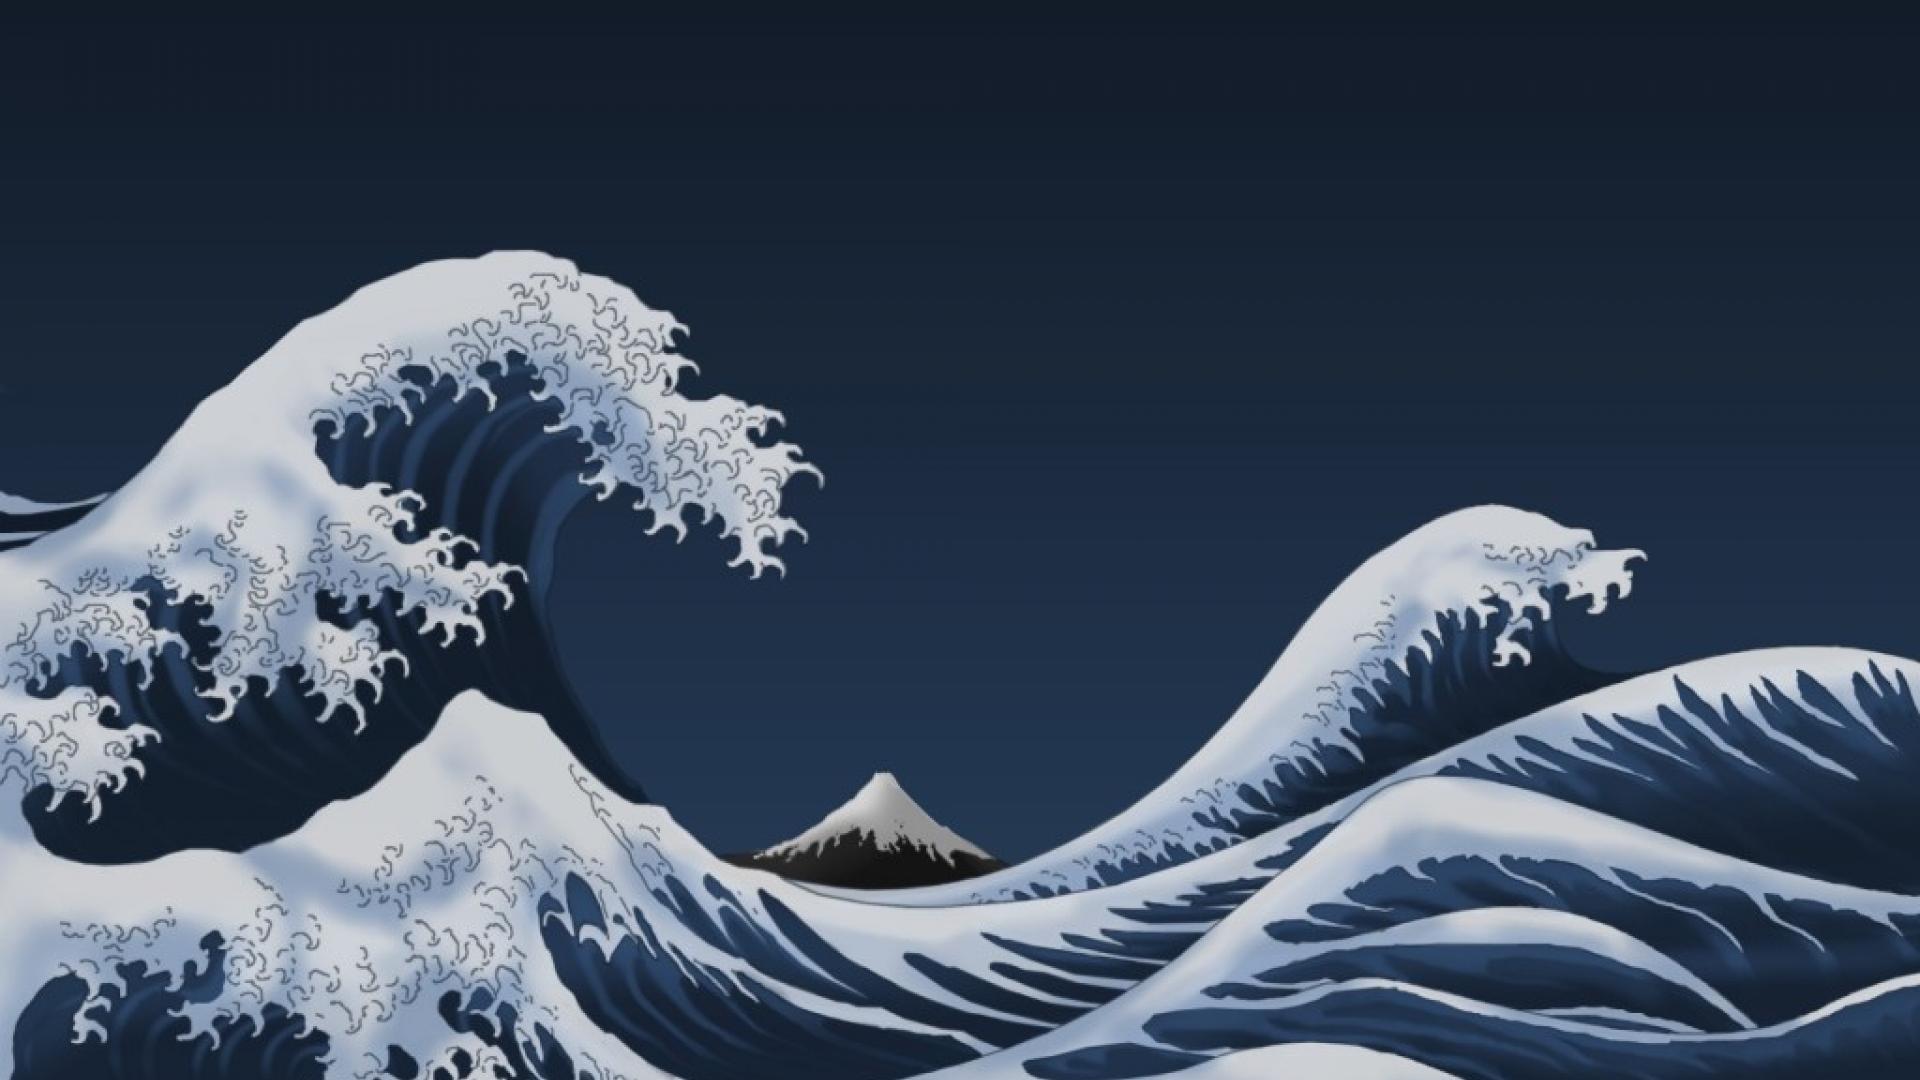 [43+] Great Wave Off Kanagawa Wallpaper on WallpaperSafari